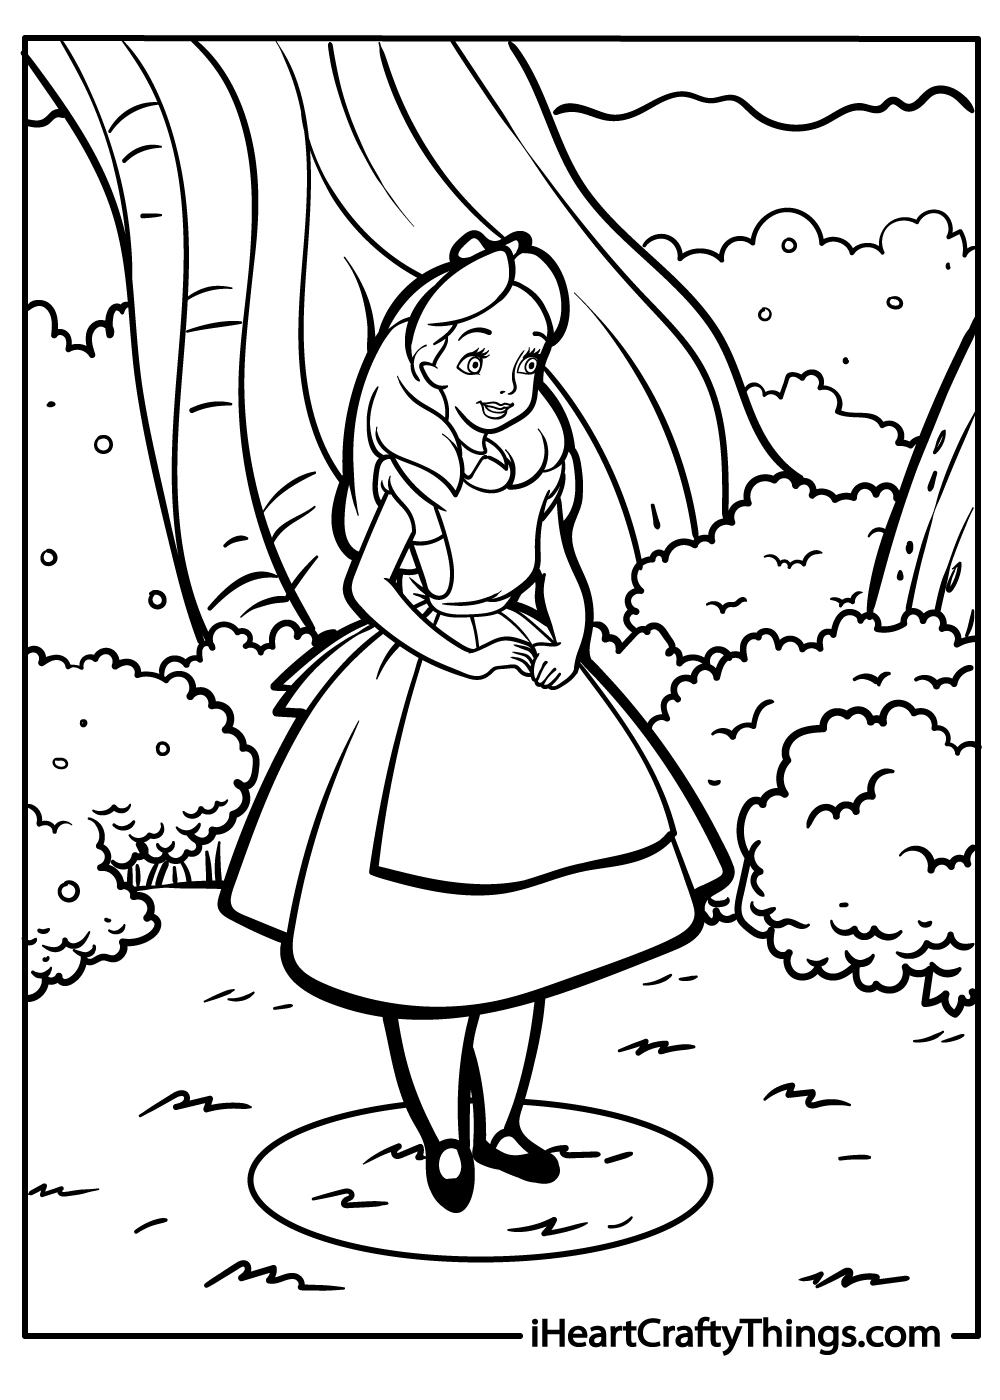 Alice in Wonderland free coloring sheet